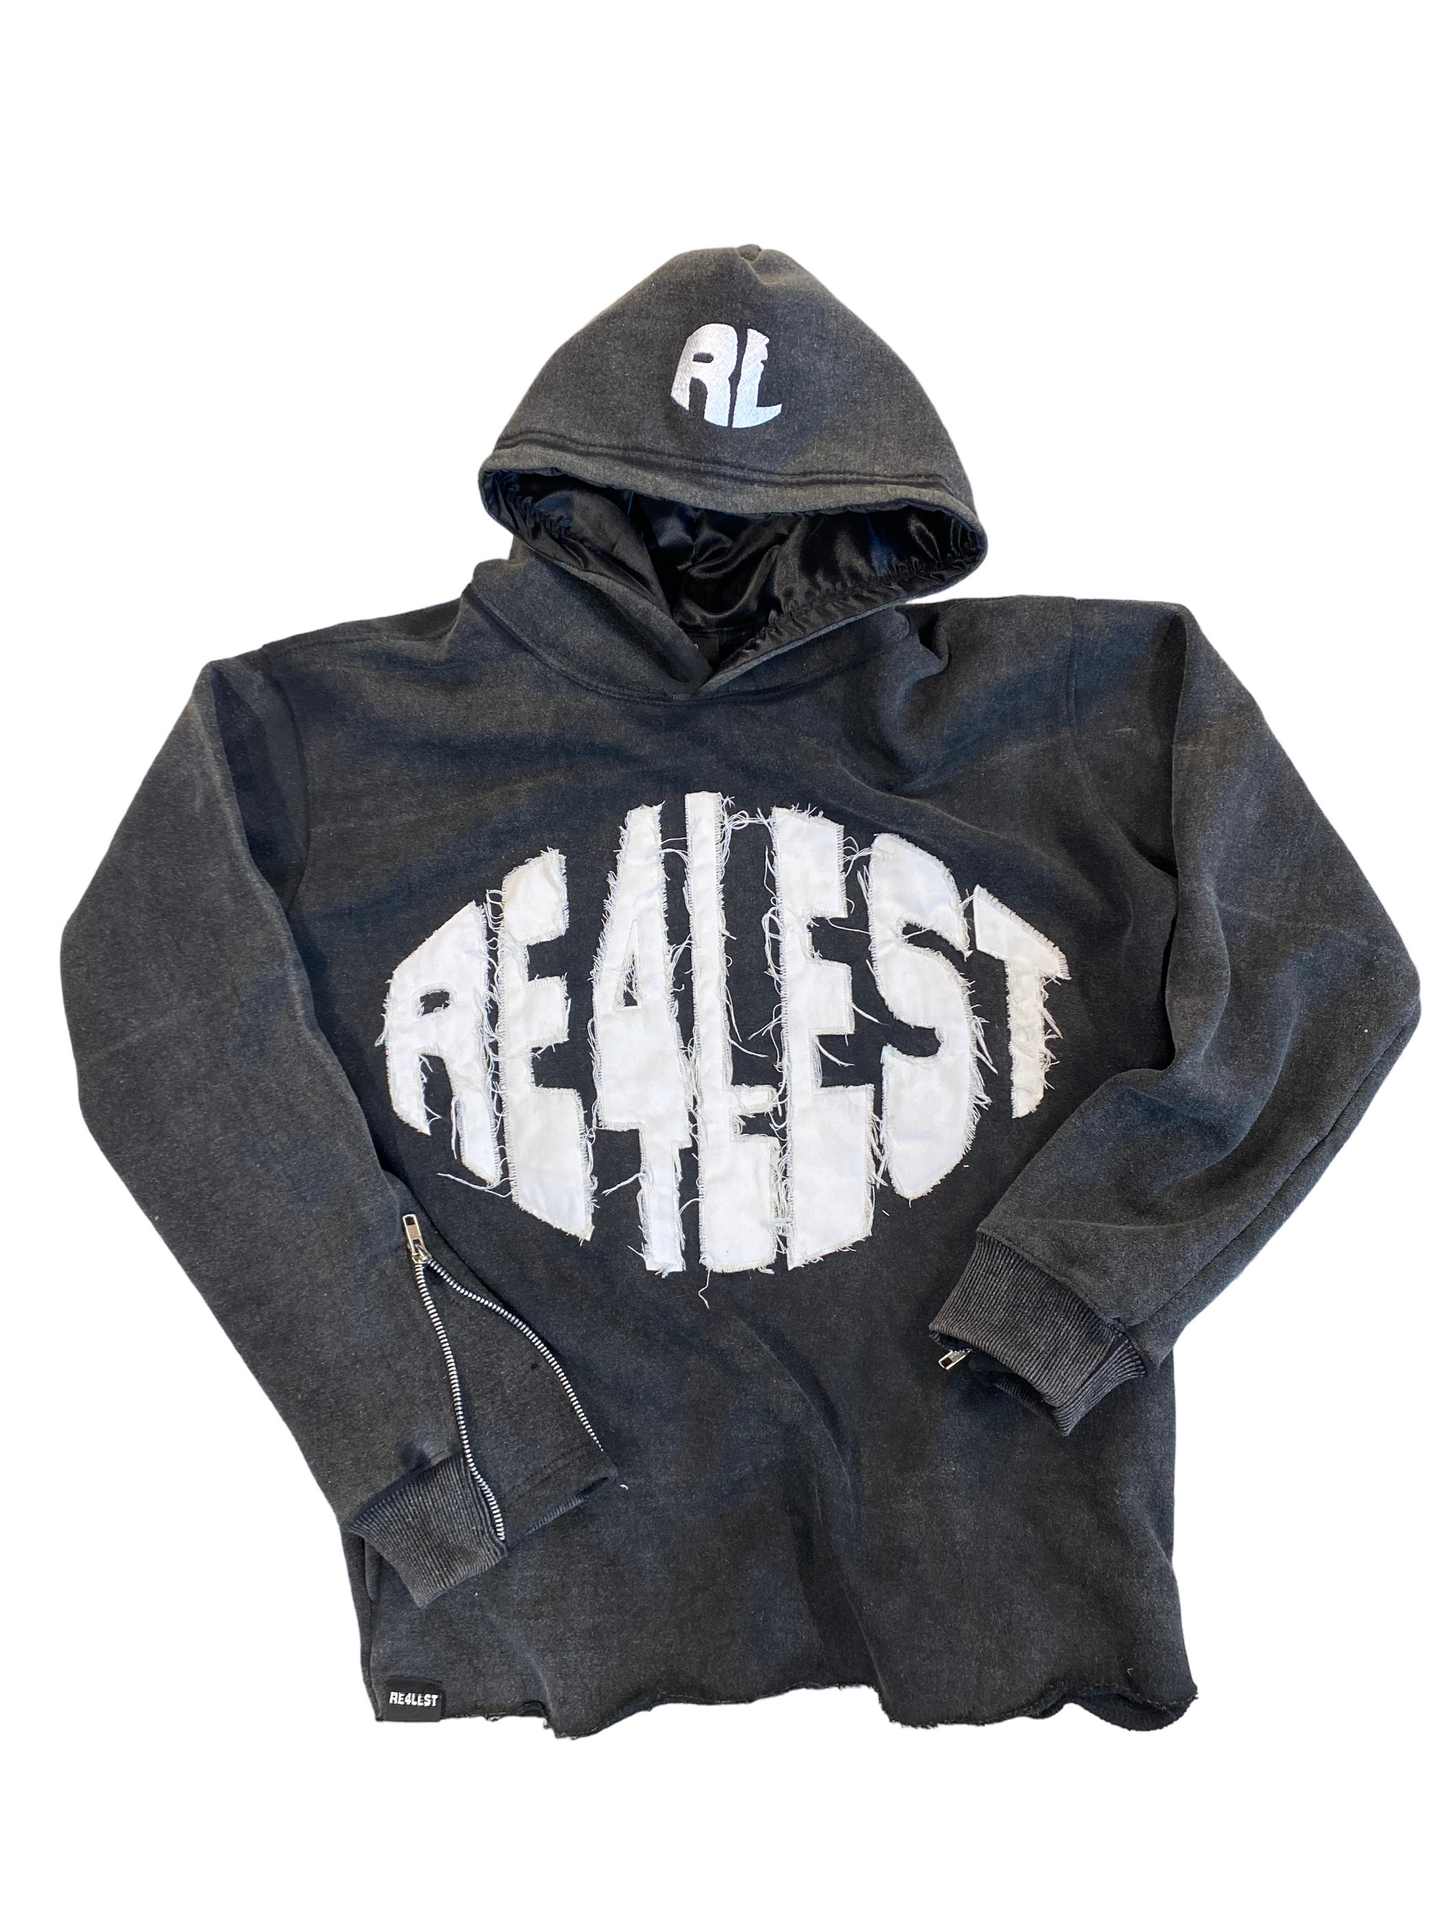 RE4LEST “3AM” distressed hoodie